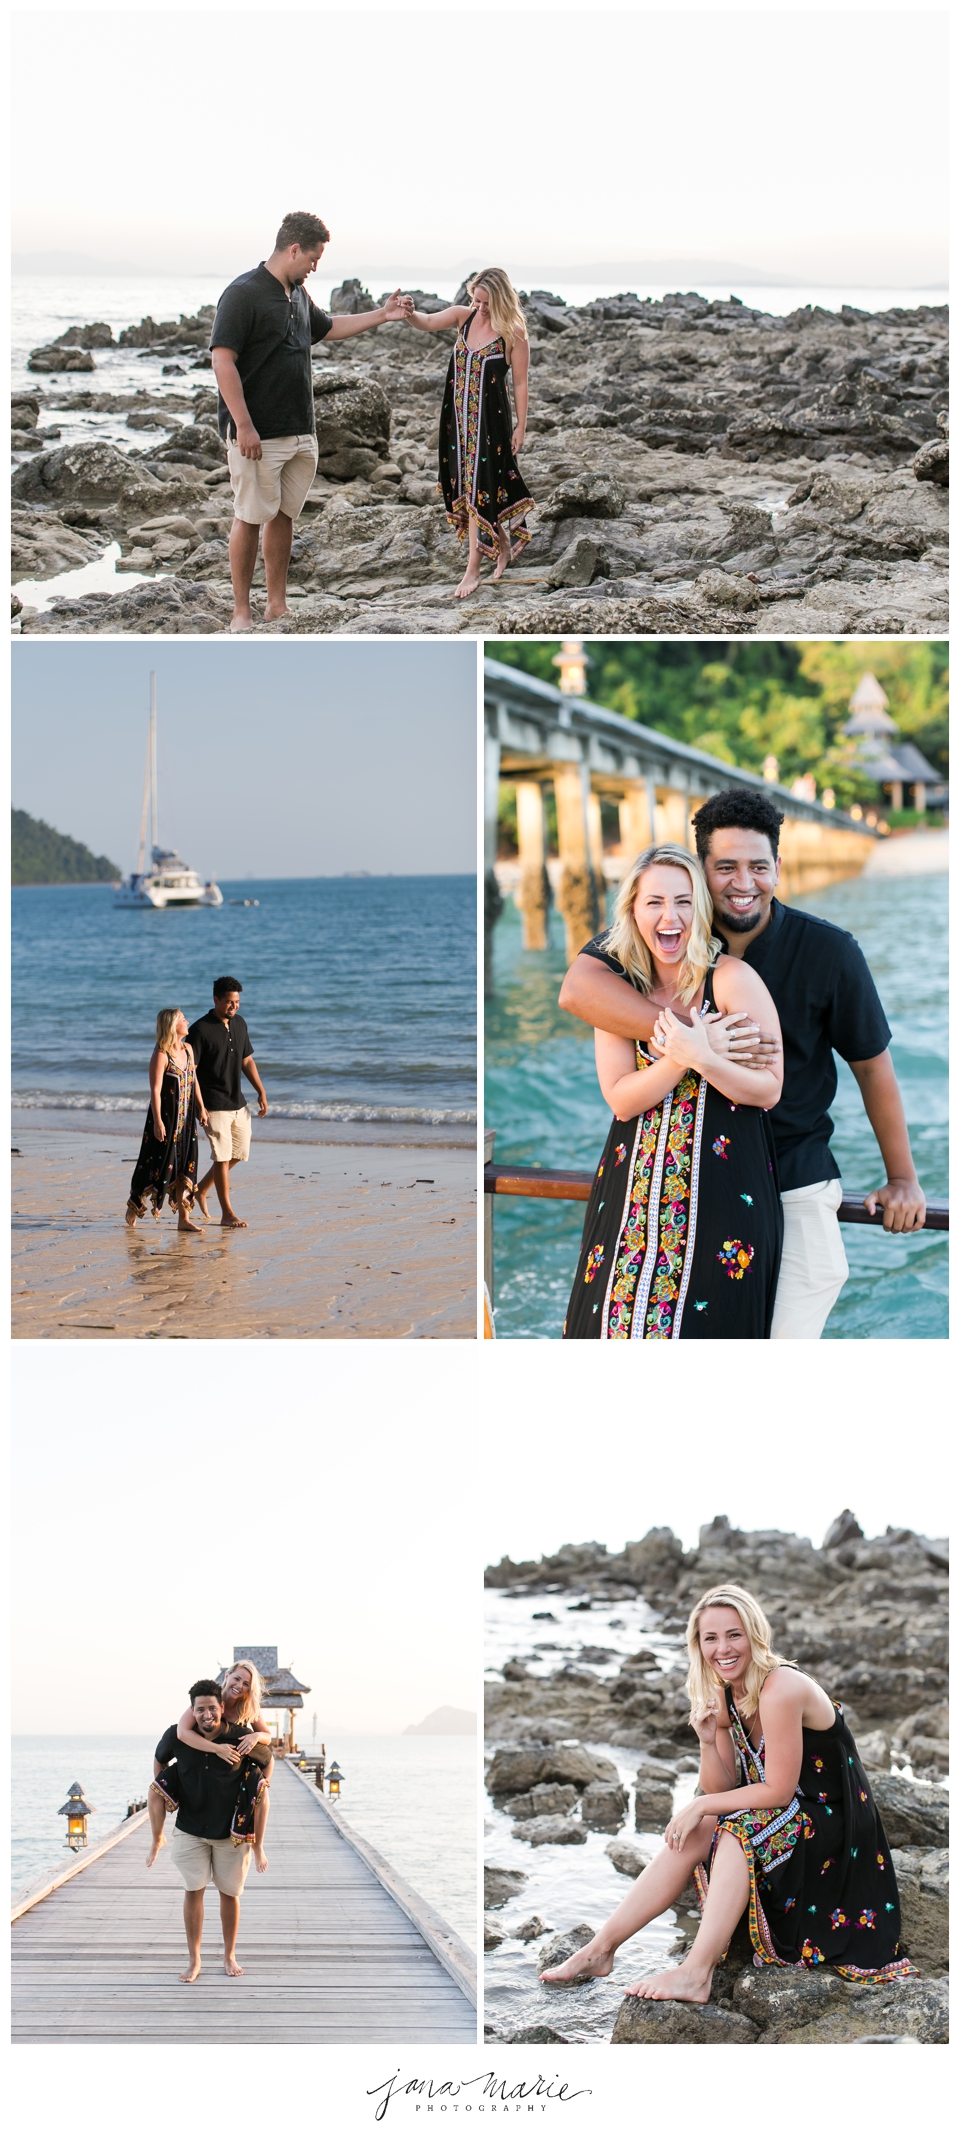 Phuket Thailand, Beach proposal, Beach portraits, Thailand engagement, Thailand photographer, Jana Marie Photography, Southeast Asia, Beaches, Island portraits, Sammi, D'Mitri, Sunset, Pier